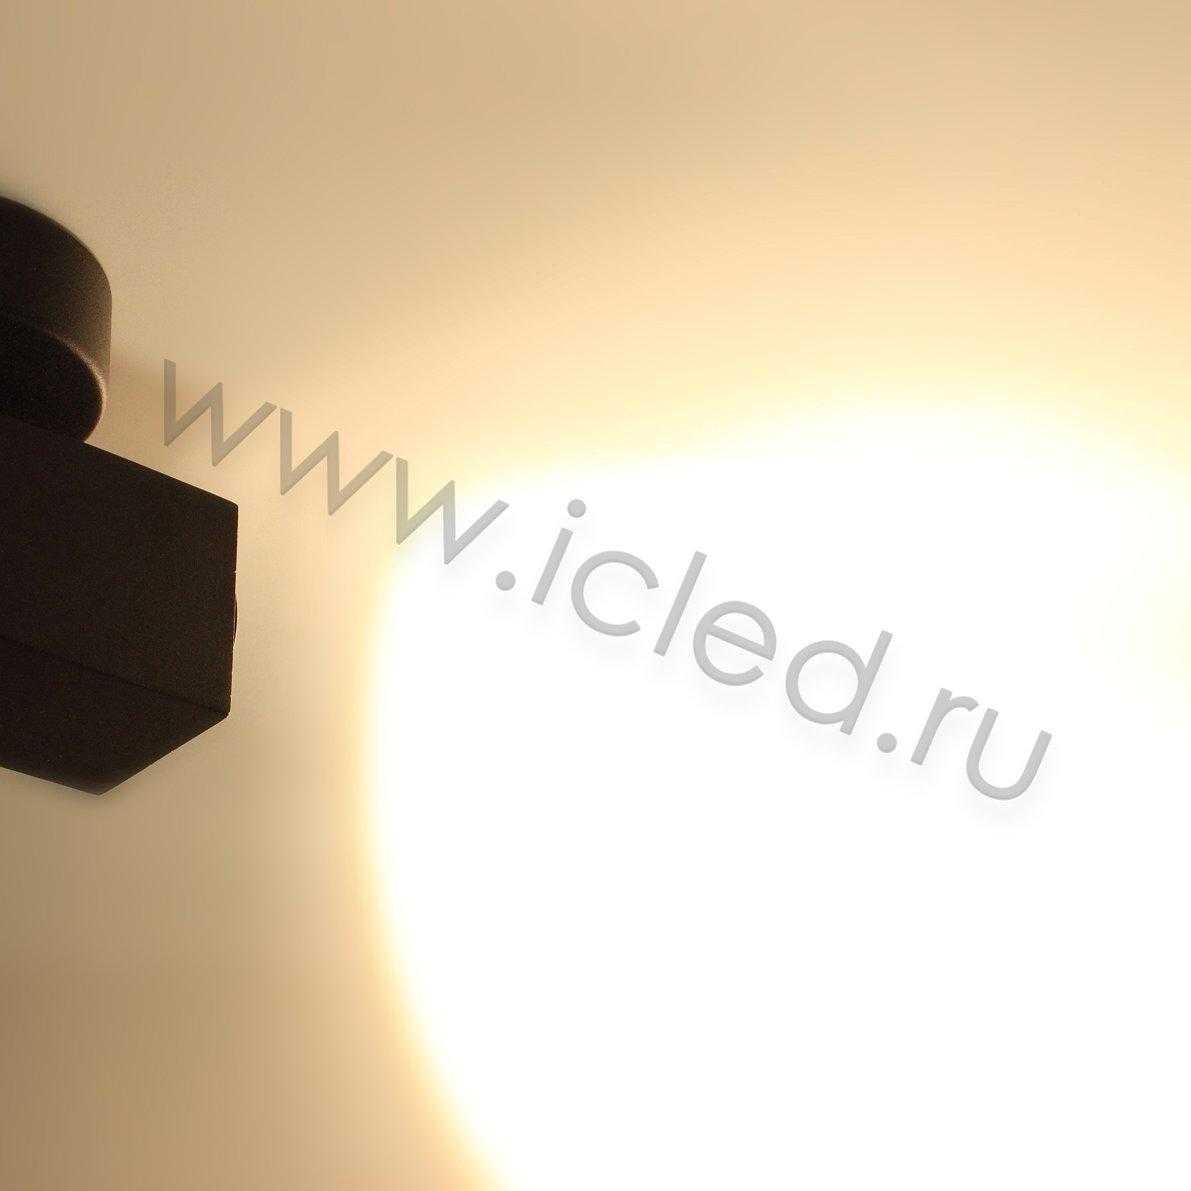 Светодиодные светильники Светодиодный светильник JH-MZTD-112 black VG8 (220V, 10W, warm white)